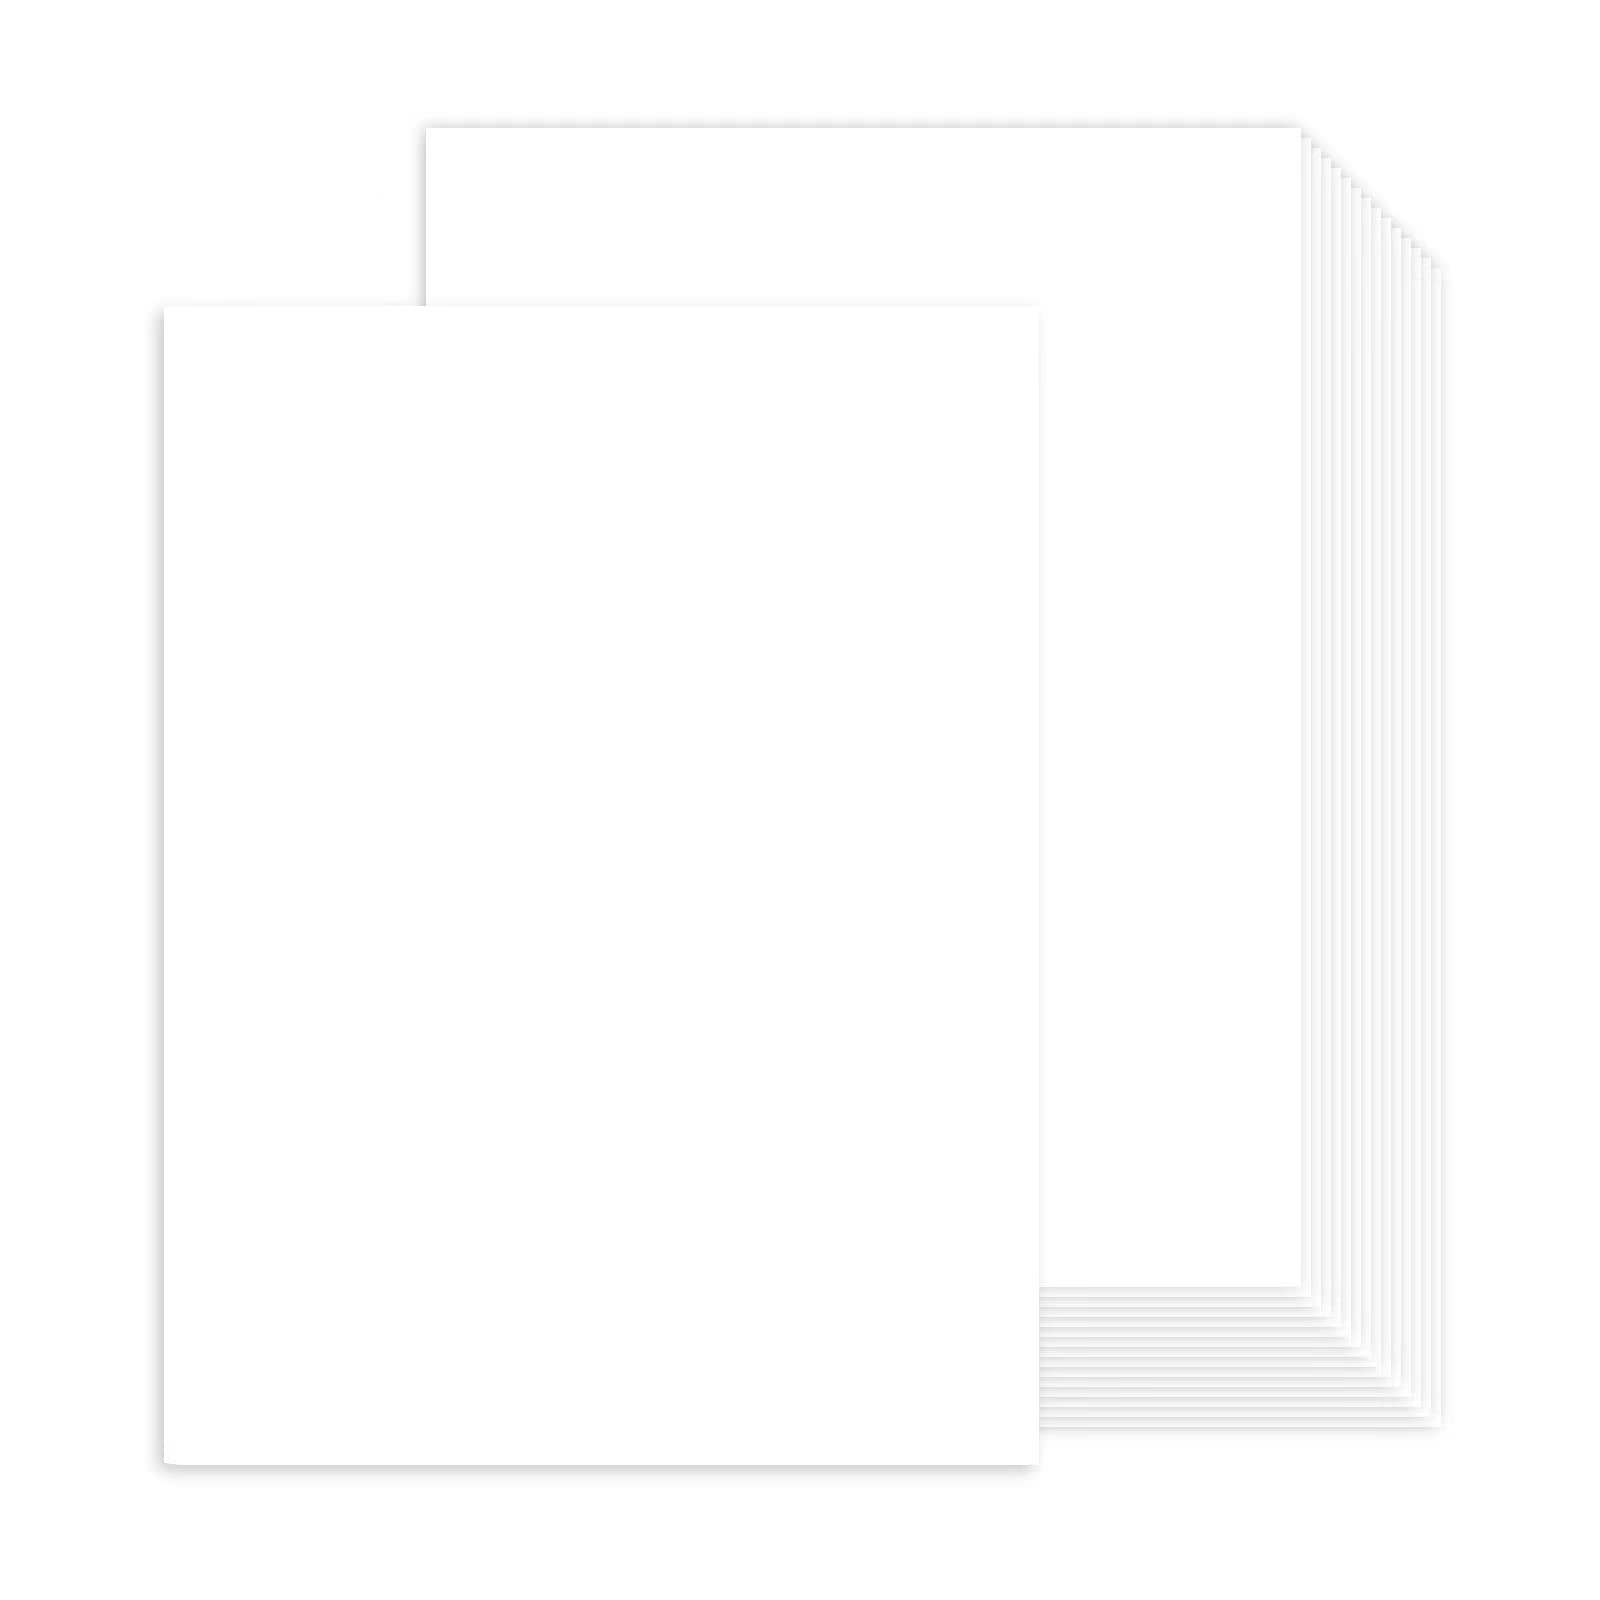 24 Sheets Light Blue Cardstock 8.5 x 11 Pastel Paper 80lb Card Stock  Printer